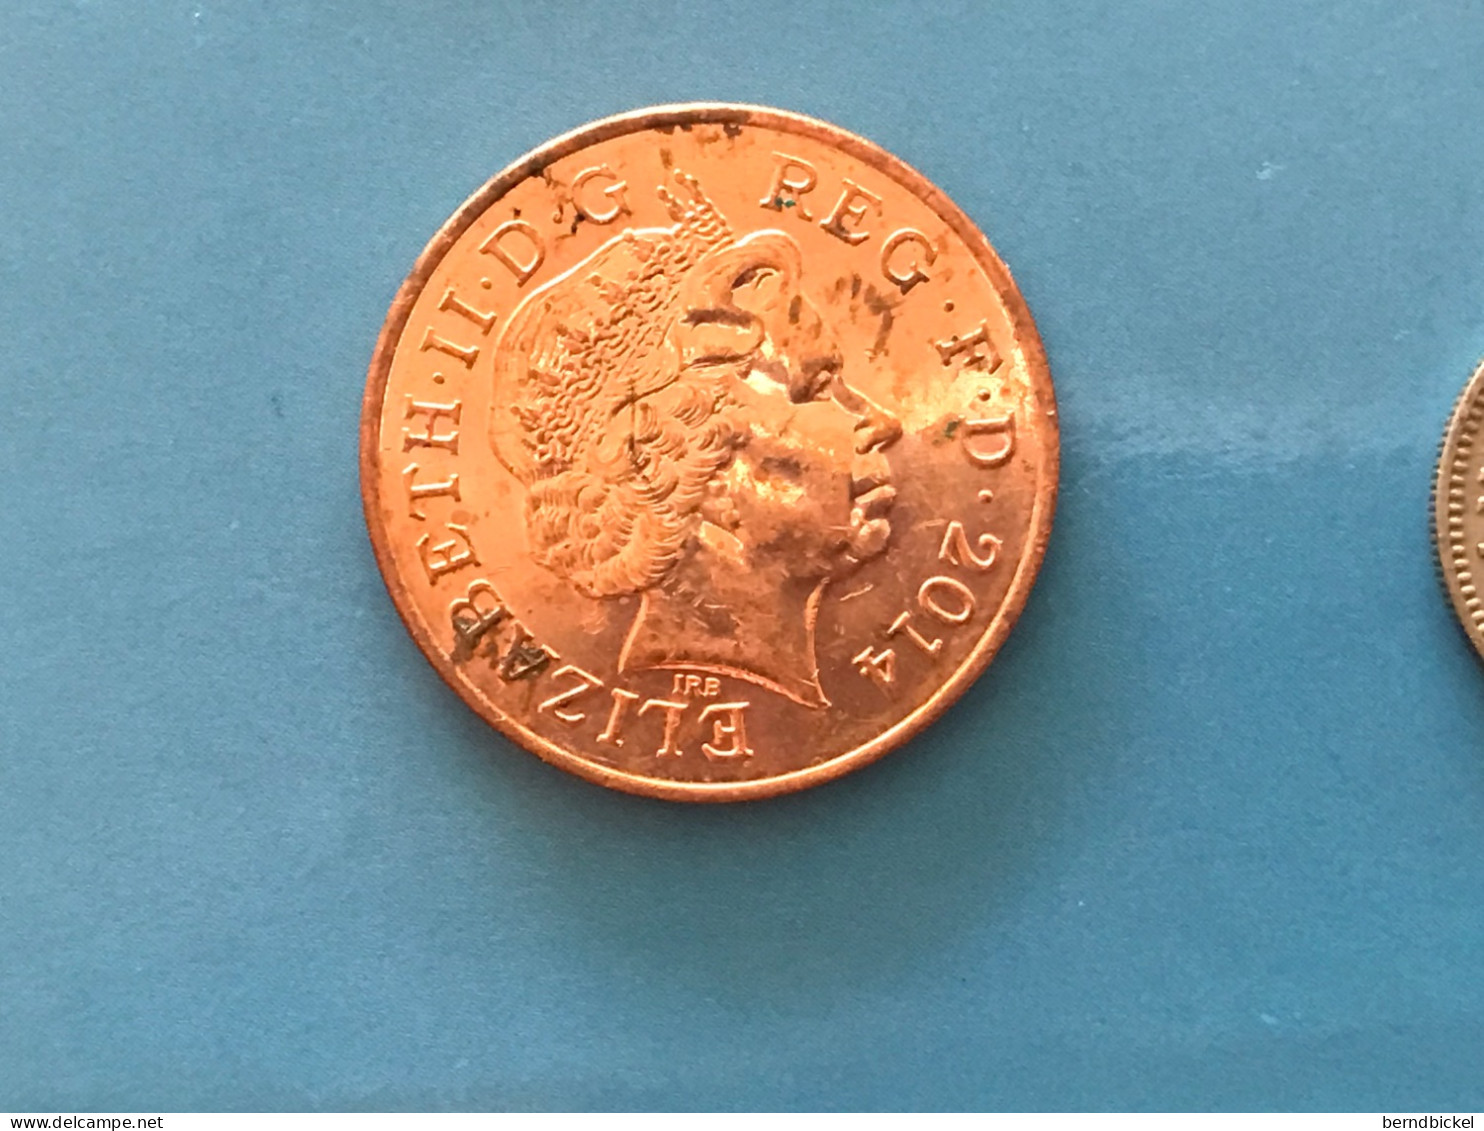 Münze Münzen Umlaufmünze Großbritannien 2 Pence 2014 - 2 Pence & 2 New Pence